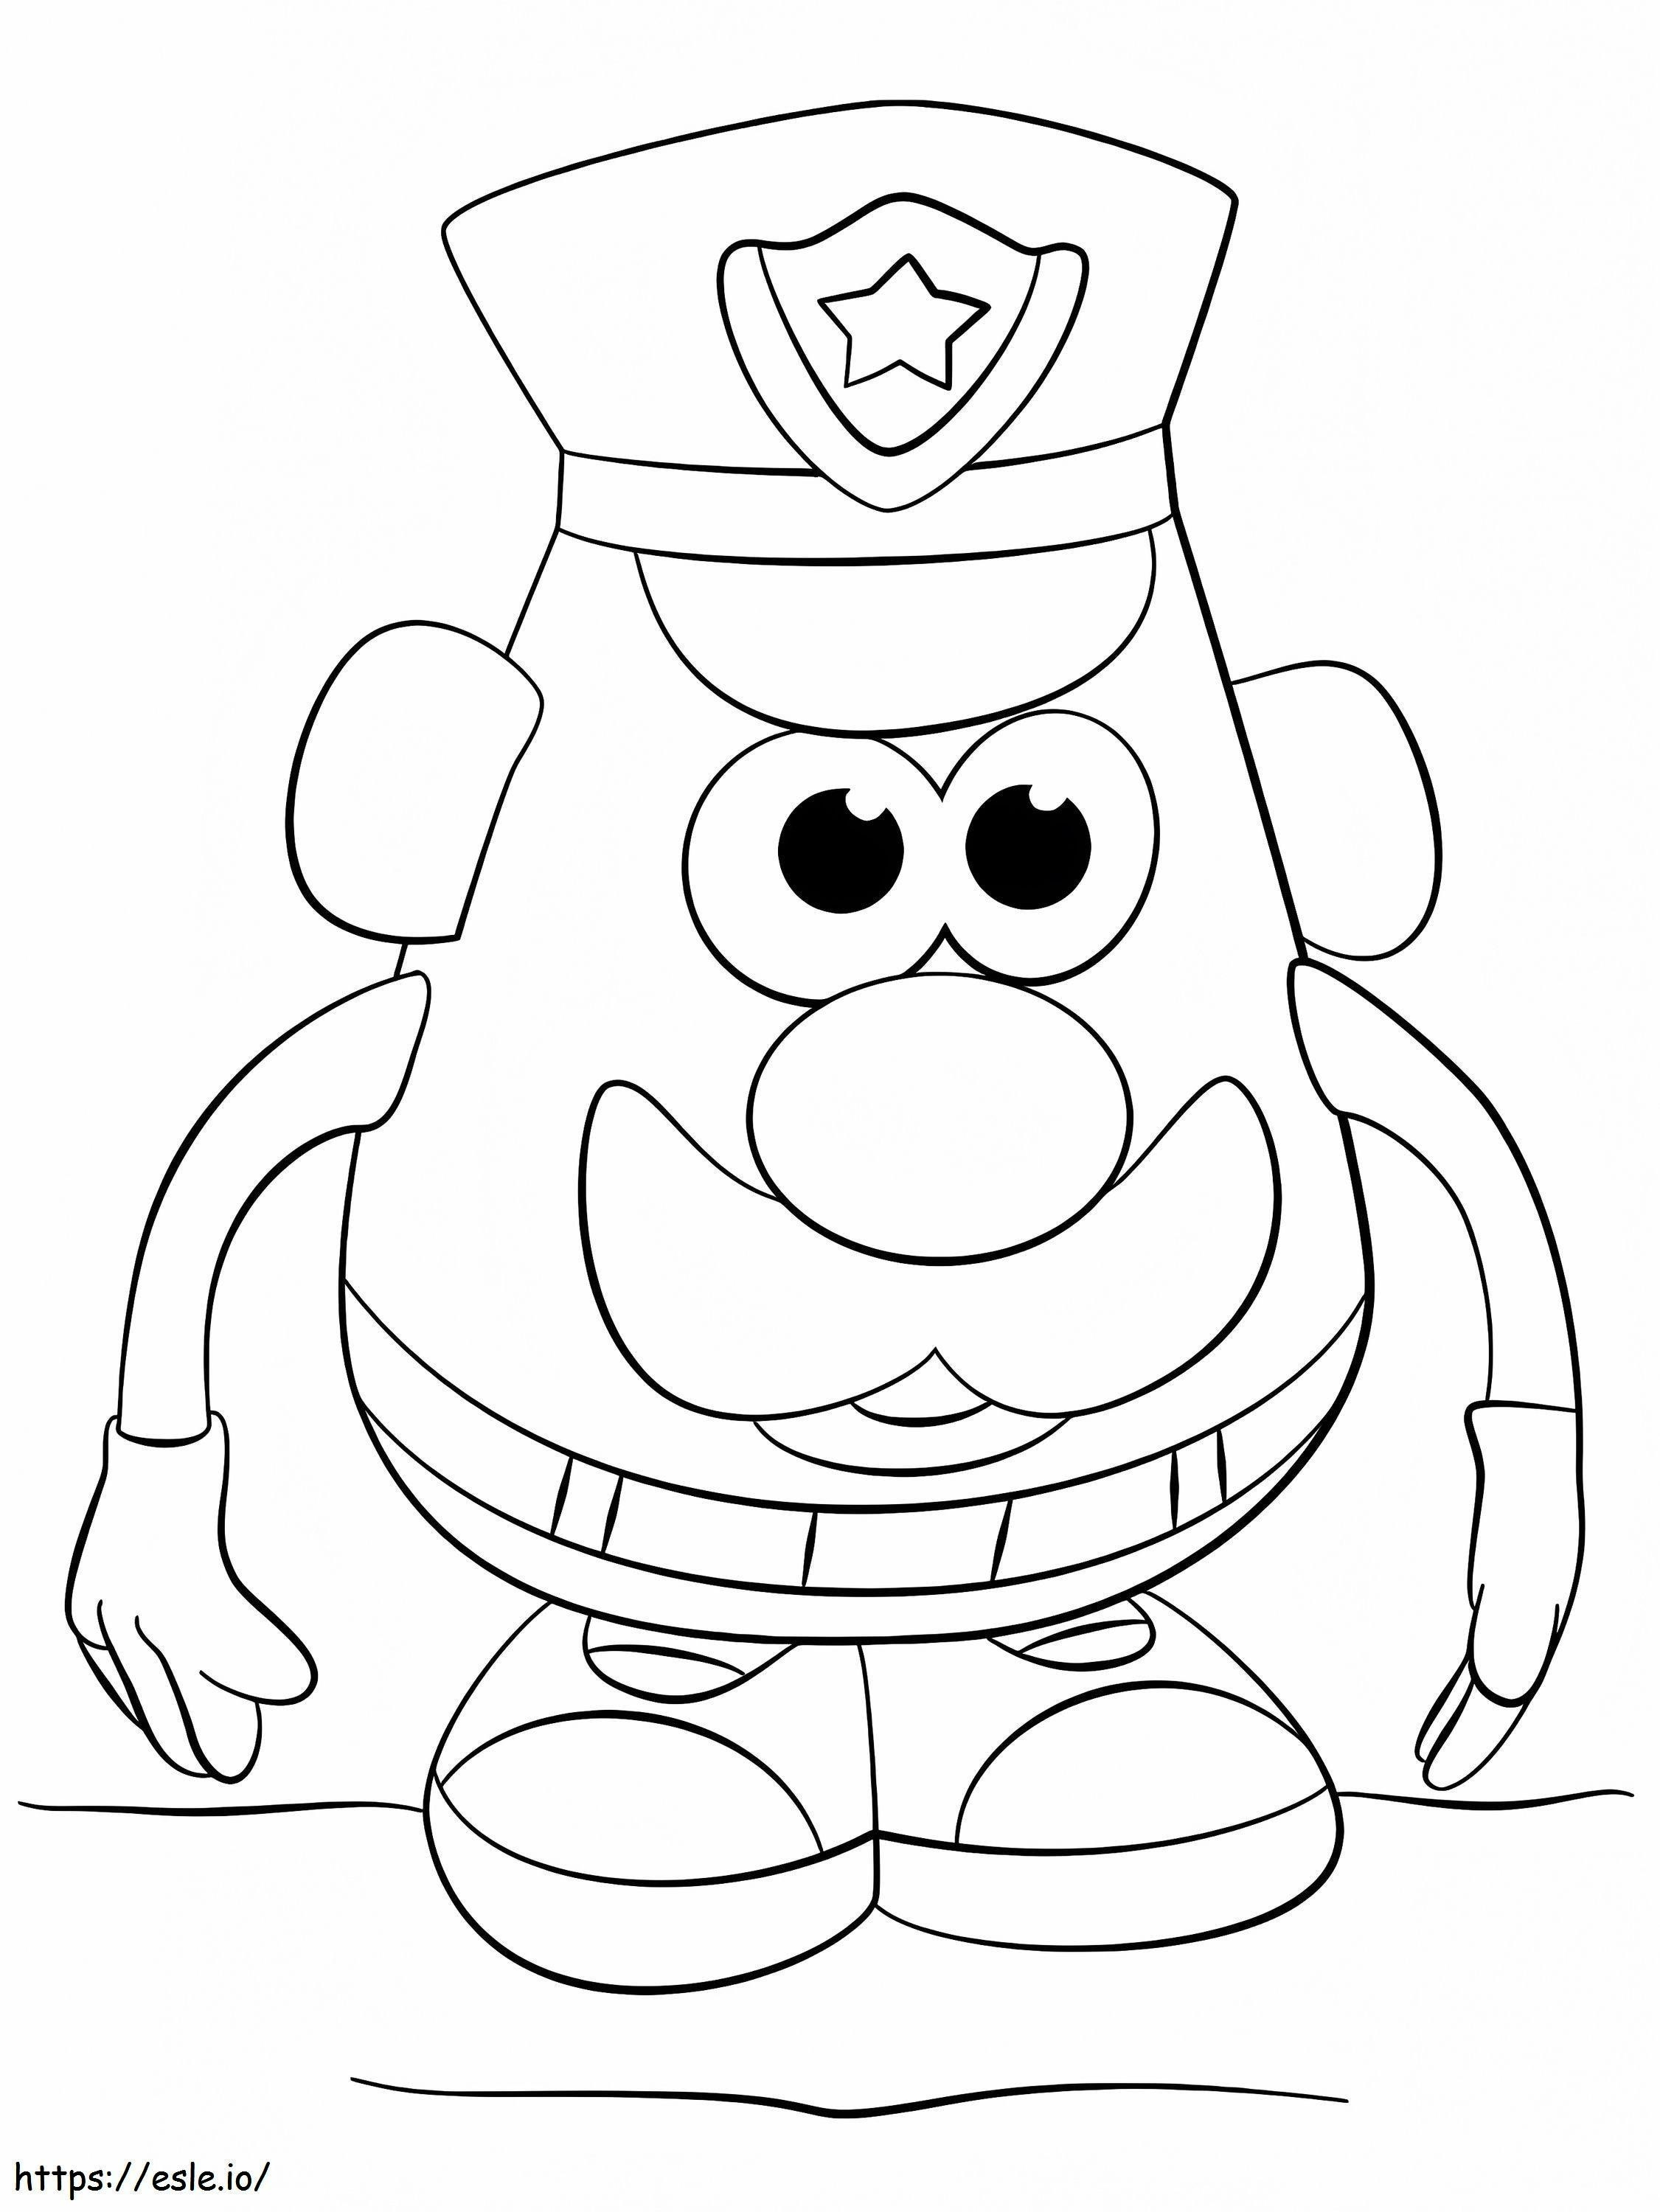 Mr. Potato Head Polizei ausmalbilder